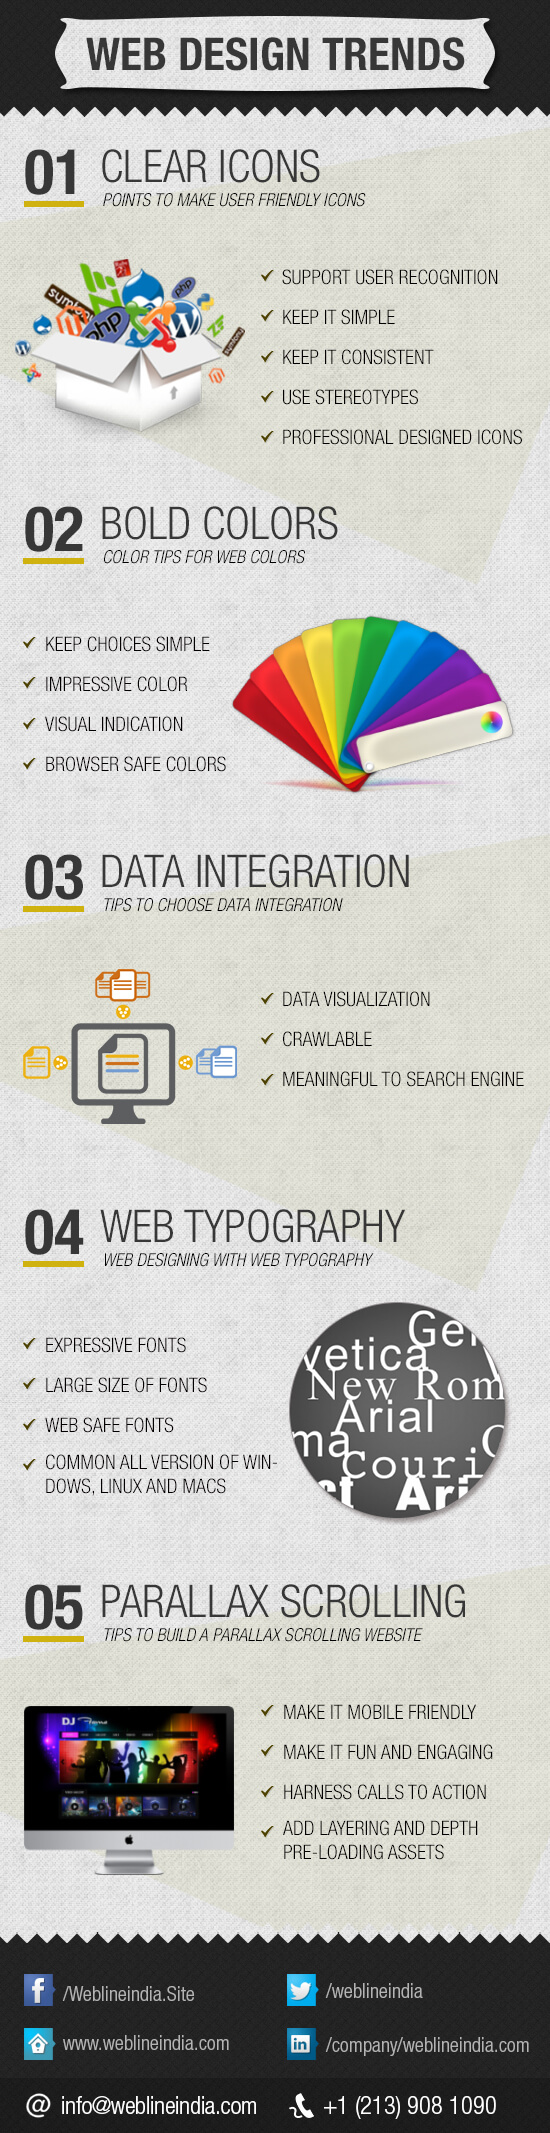 Web Design Trends Infographic